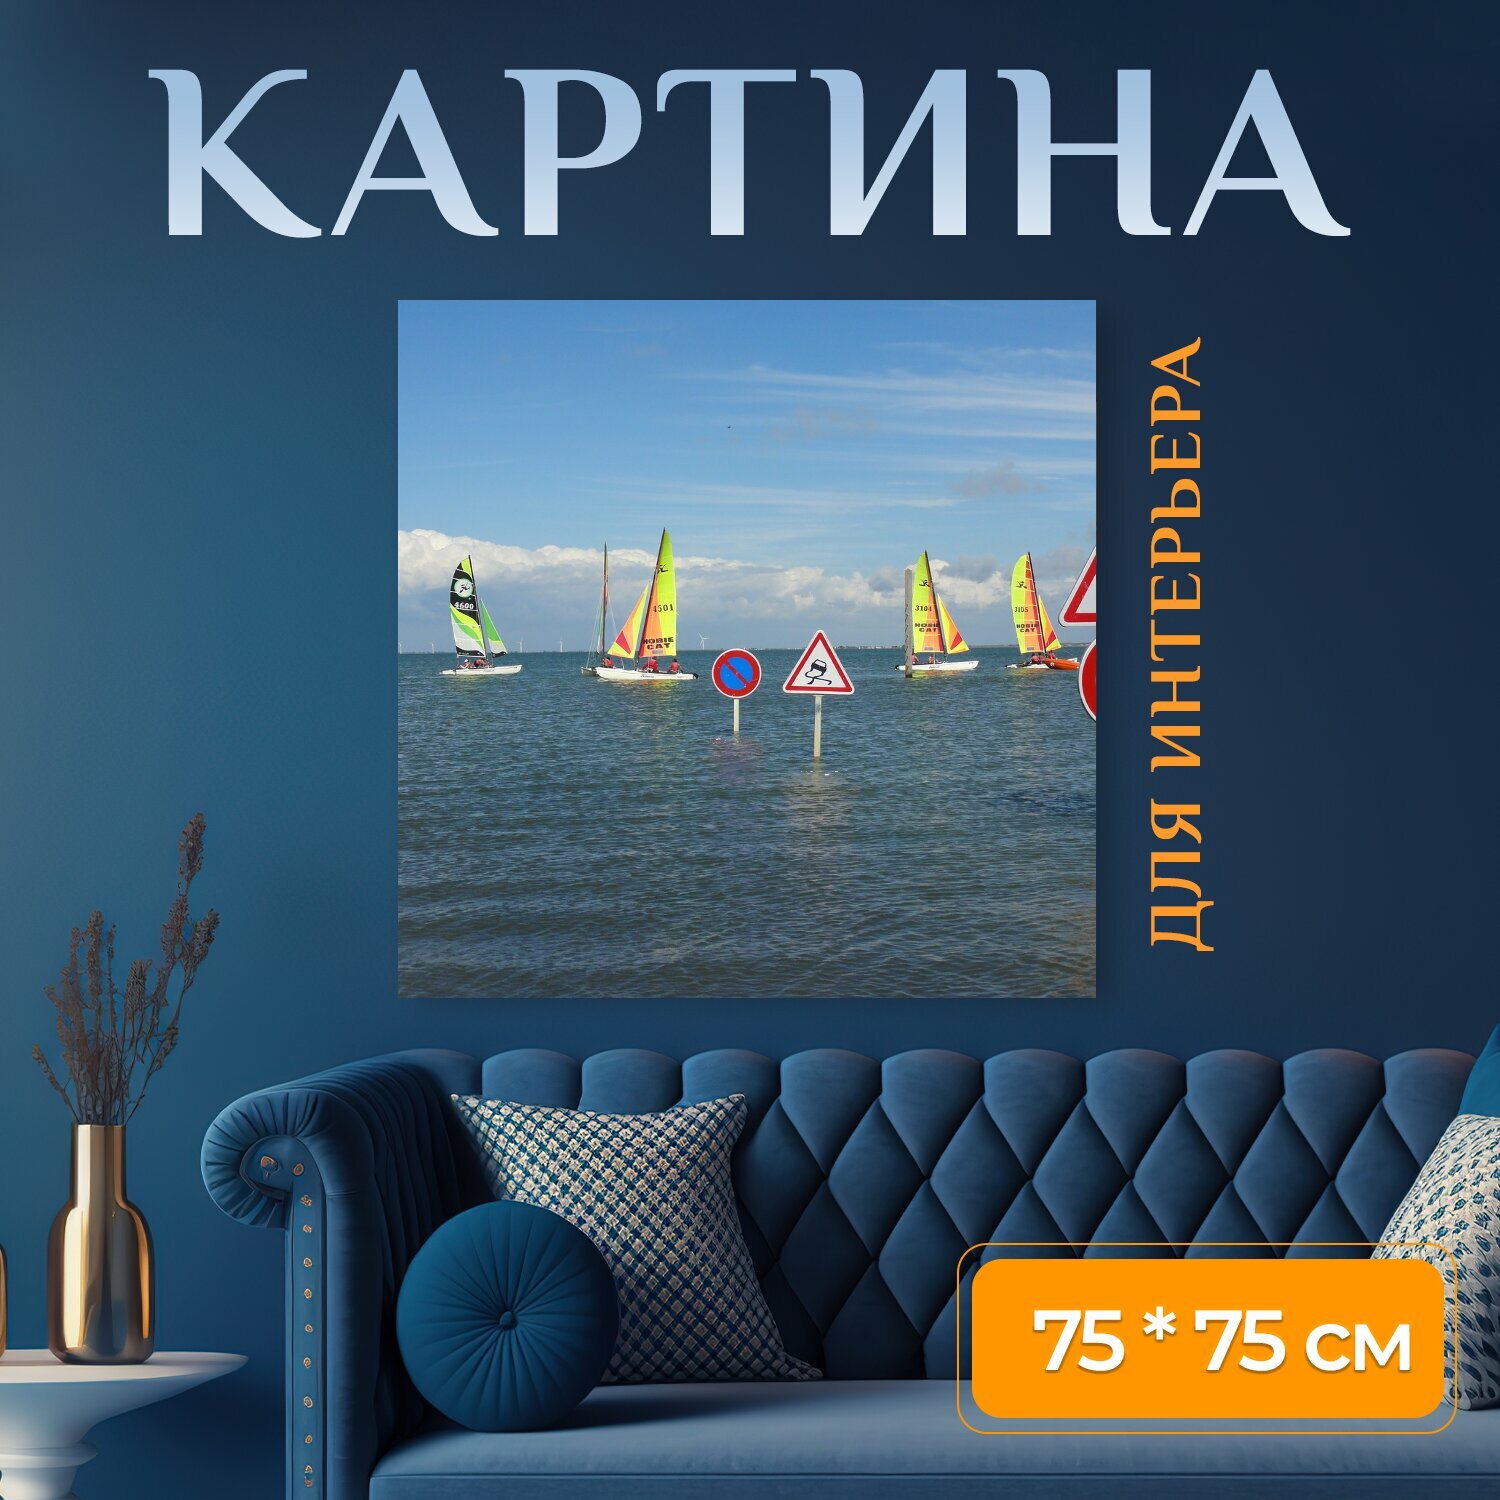 Картина на холсте "Вуаль, лодка, катамаран" на подрамнике 75х75 см. для интерьера